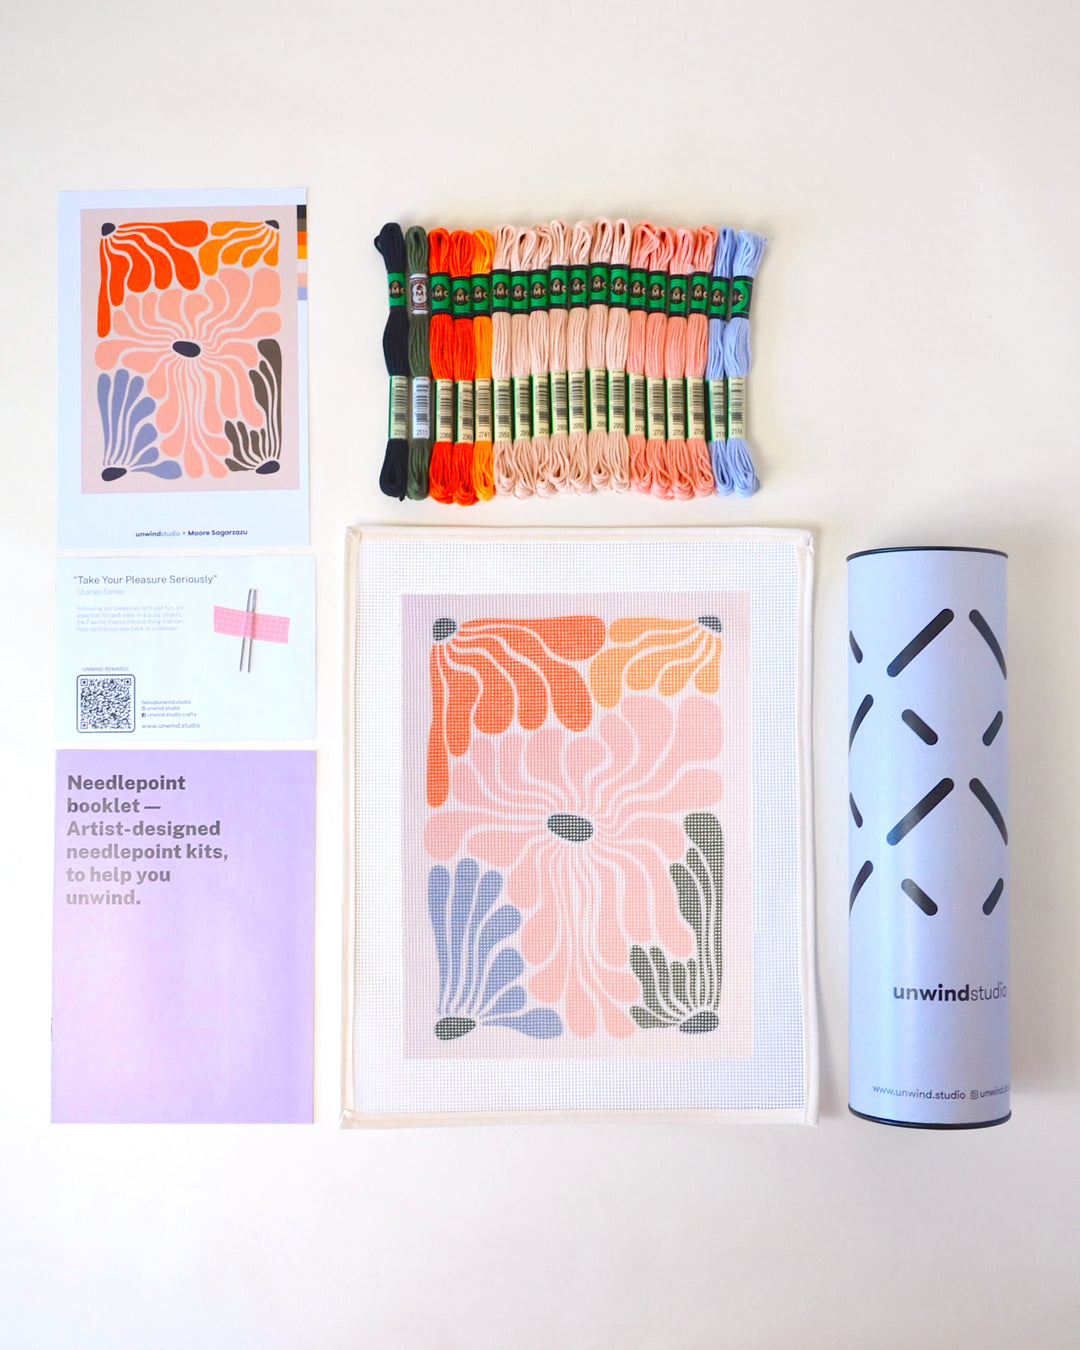 Basaloreak floral modern design needlepoint kit and needlepoint canvas 